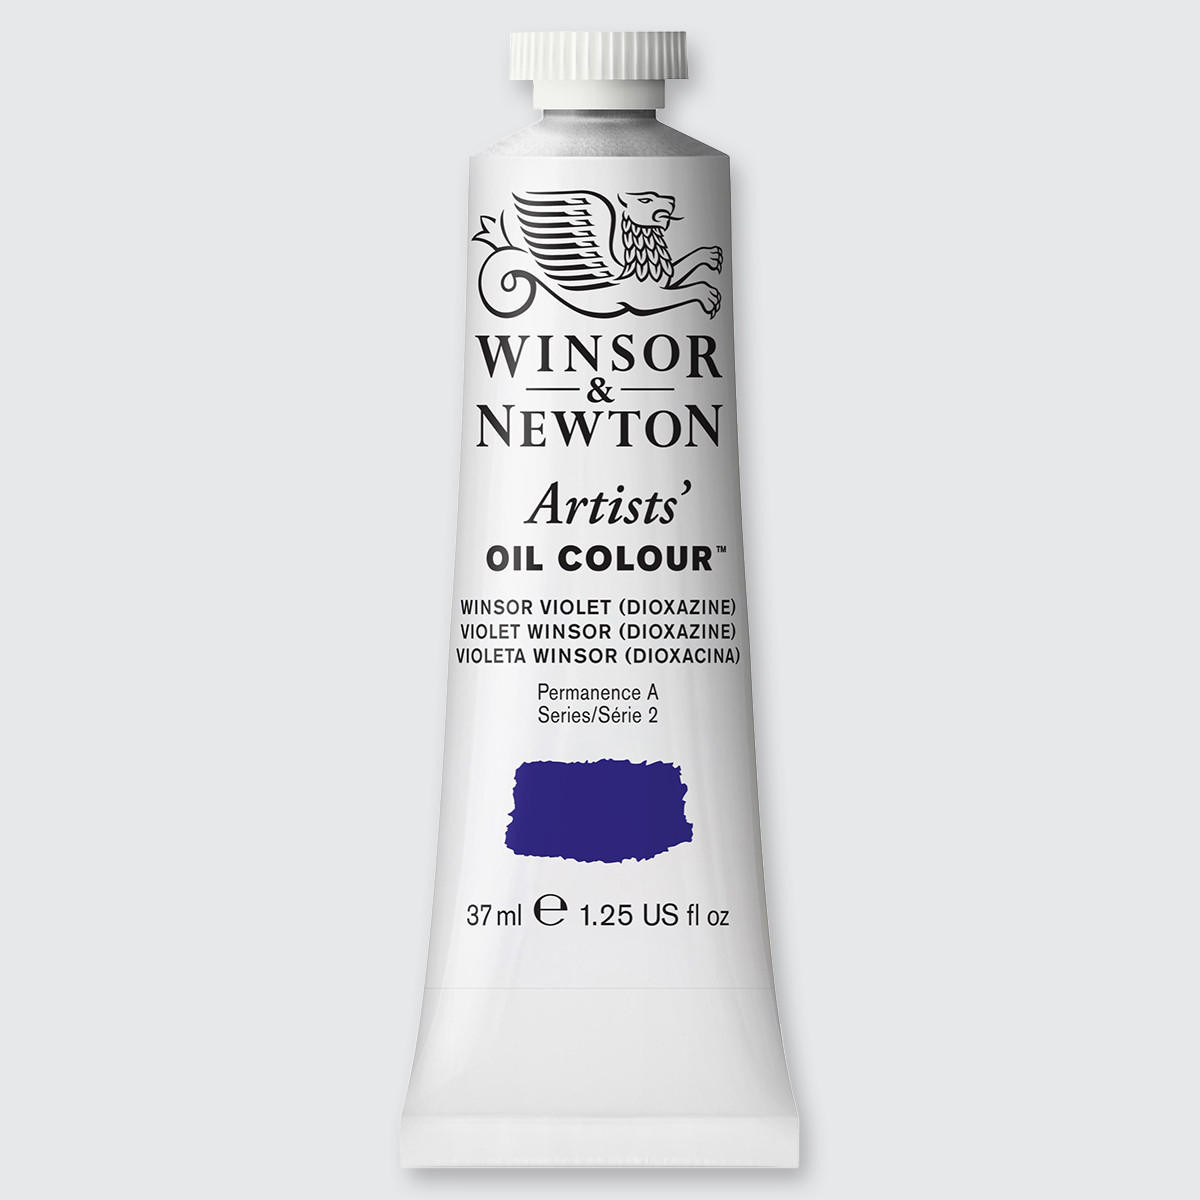 Winsor & Newton Artists’ Oil Colour 37ml Winsor Violet Dioxazine